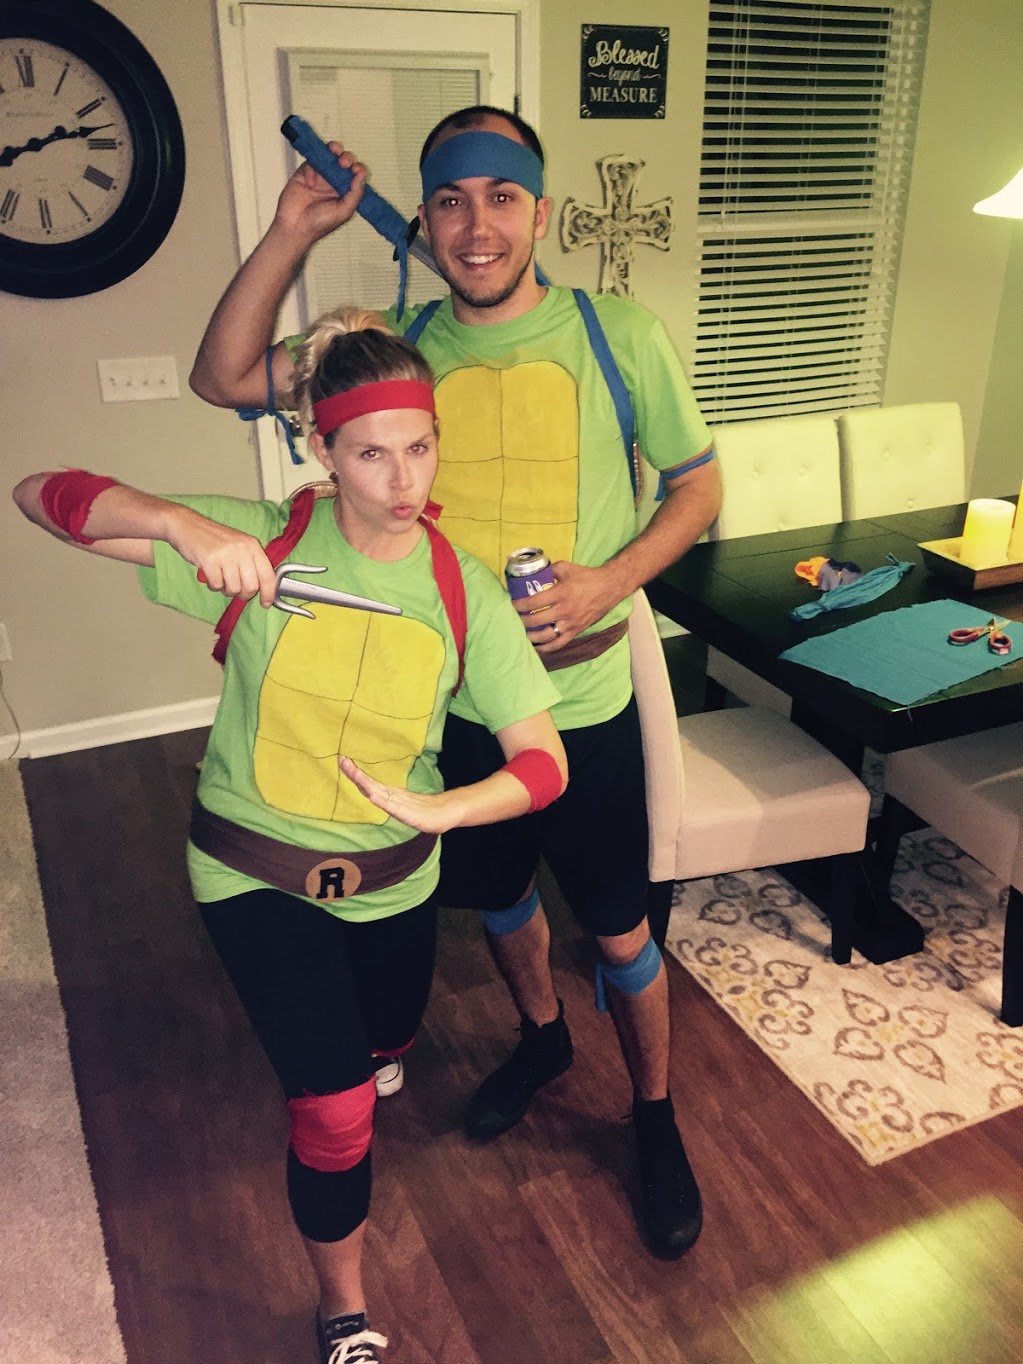 Turtle costumes